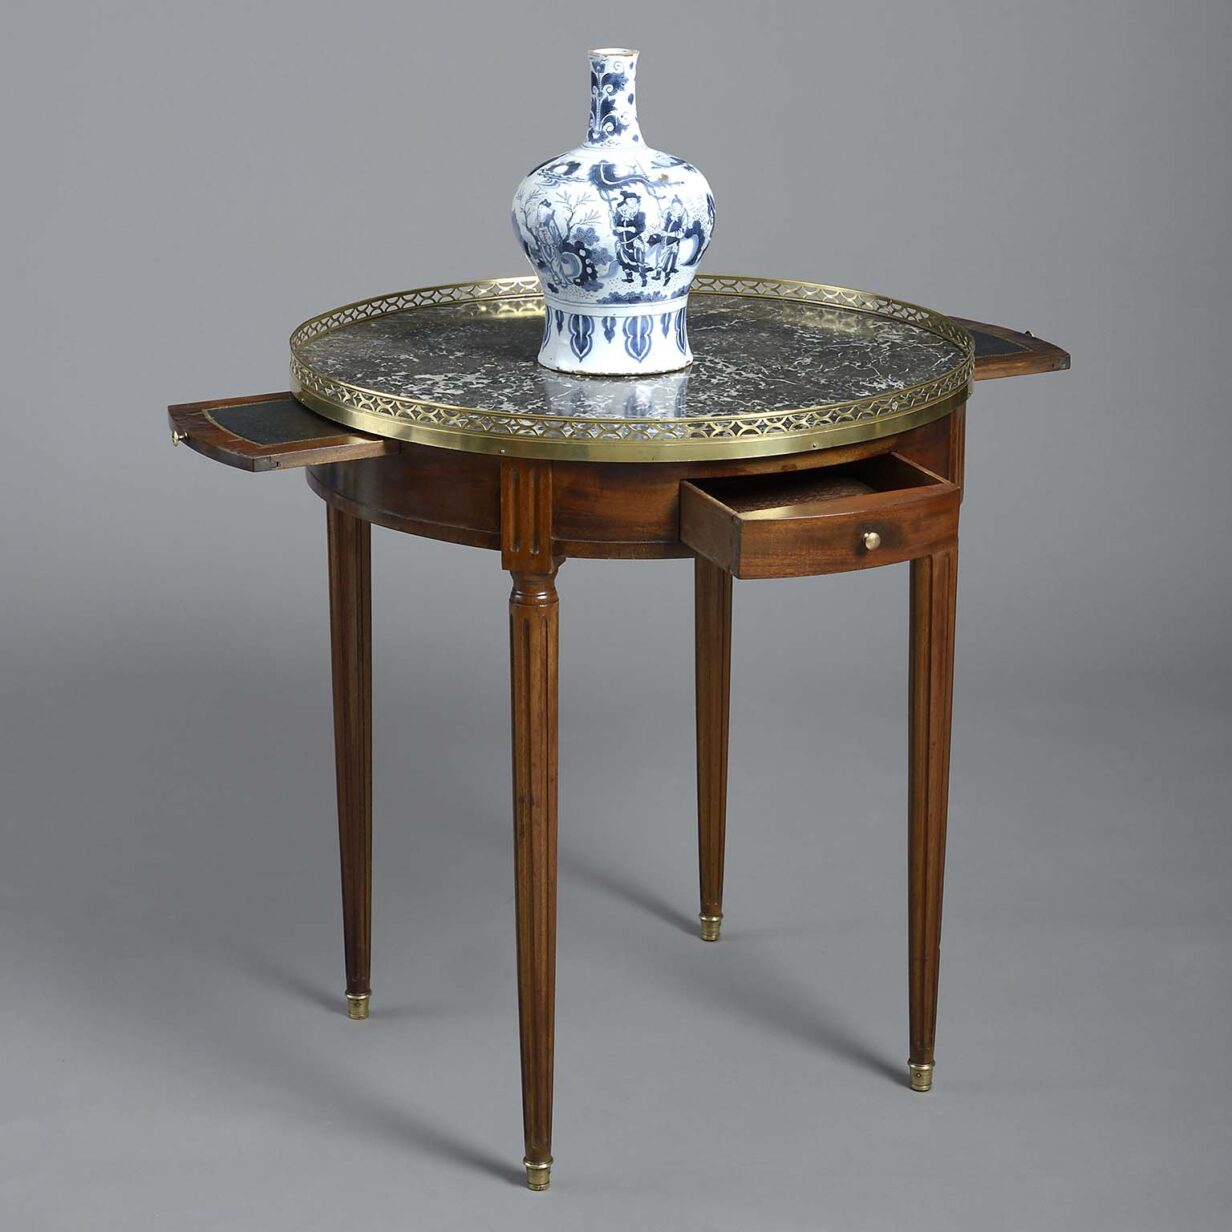 Late 18th century louis xvi period mahogany bouillotte table